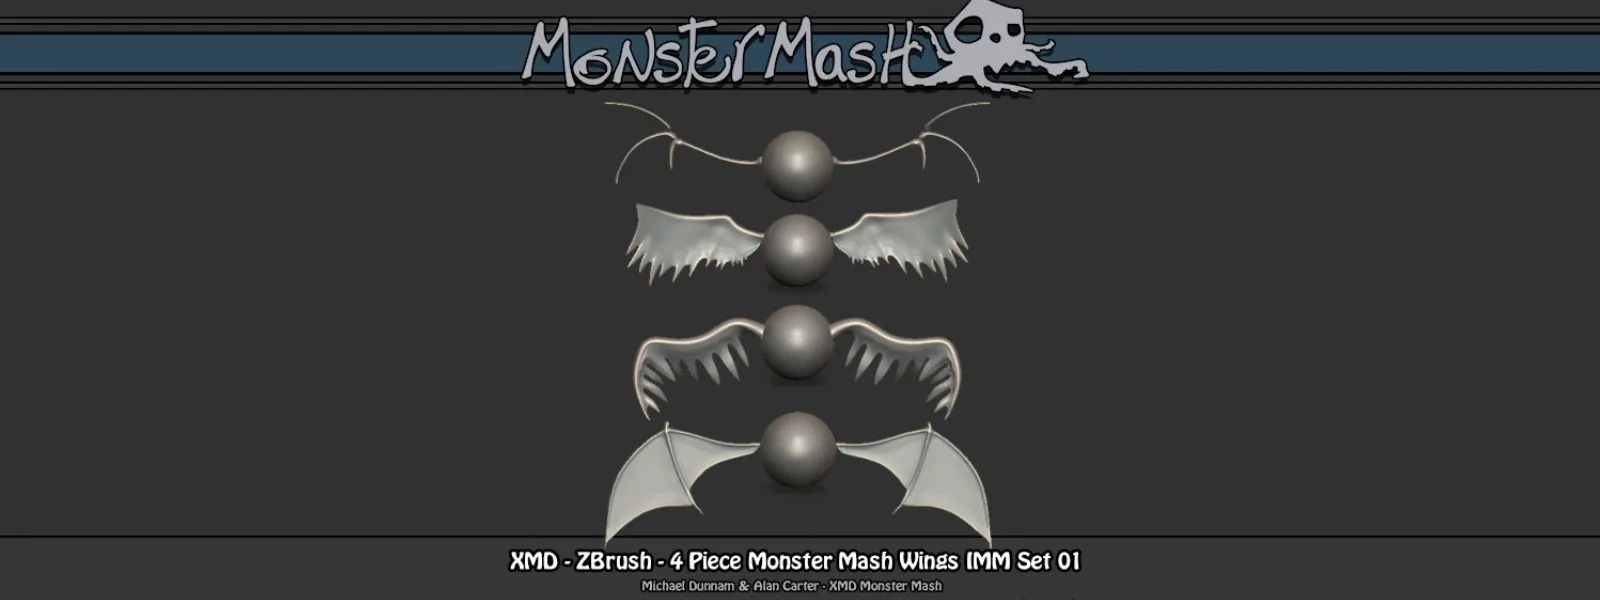 XMD - Monster Mash - ZBrush Brushes - IMM Wings Set 01